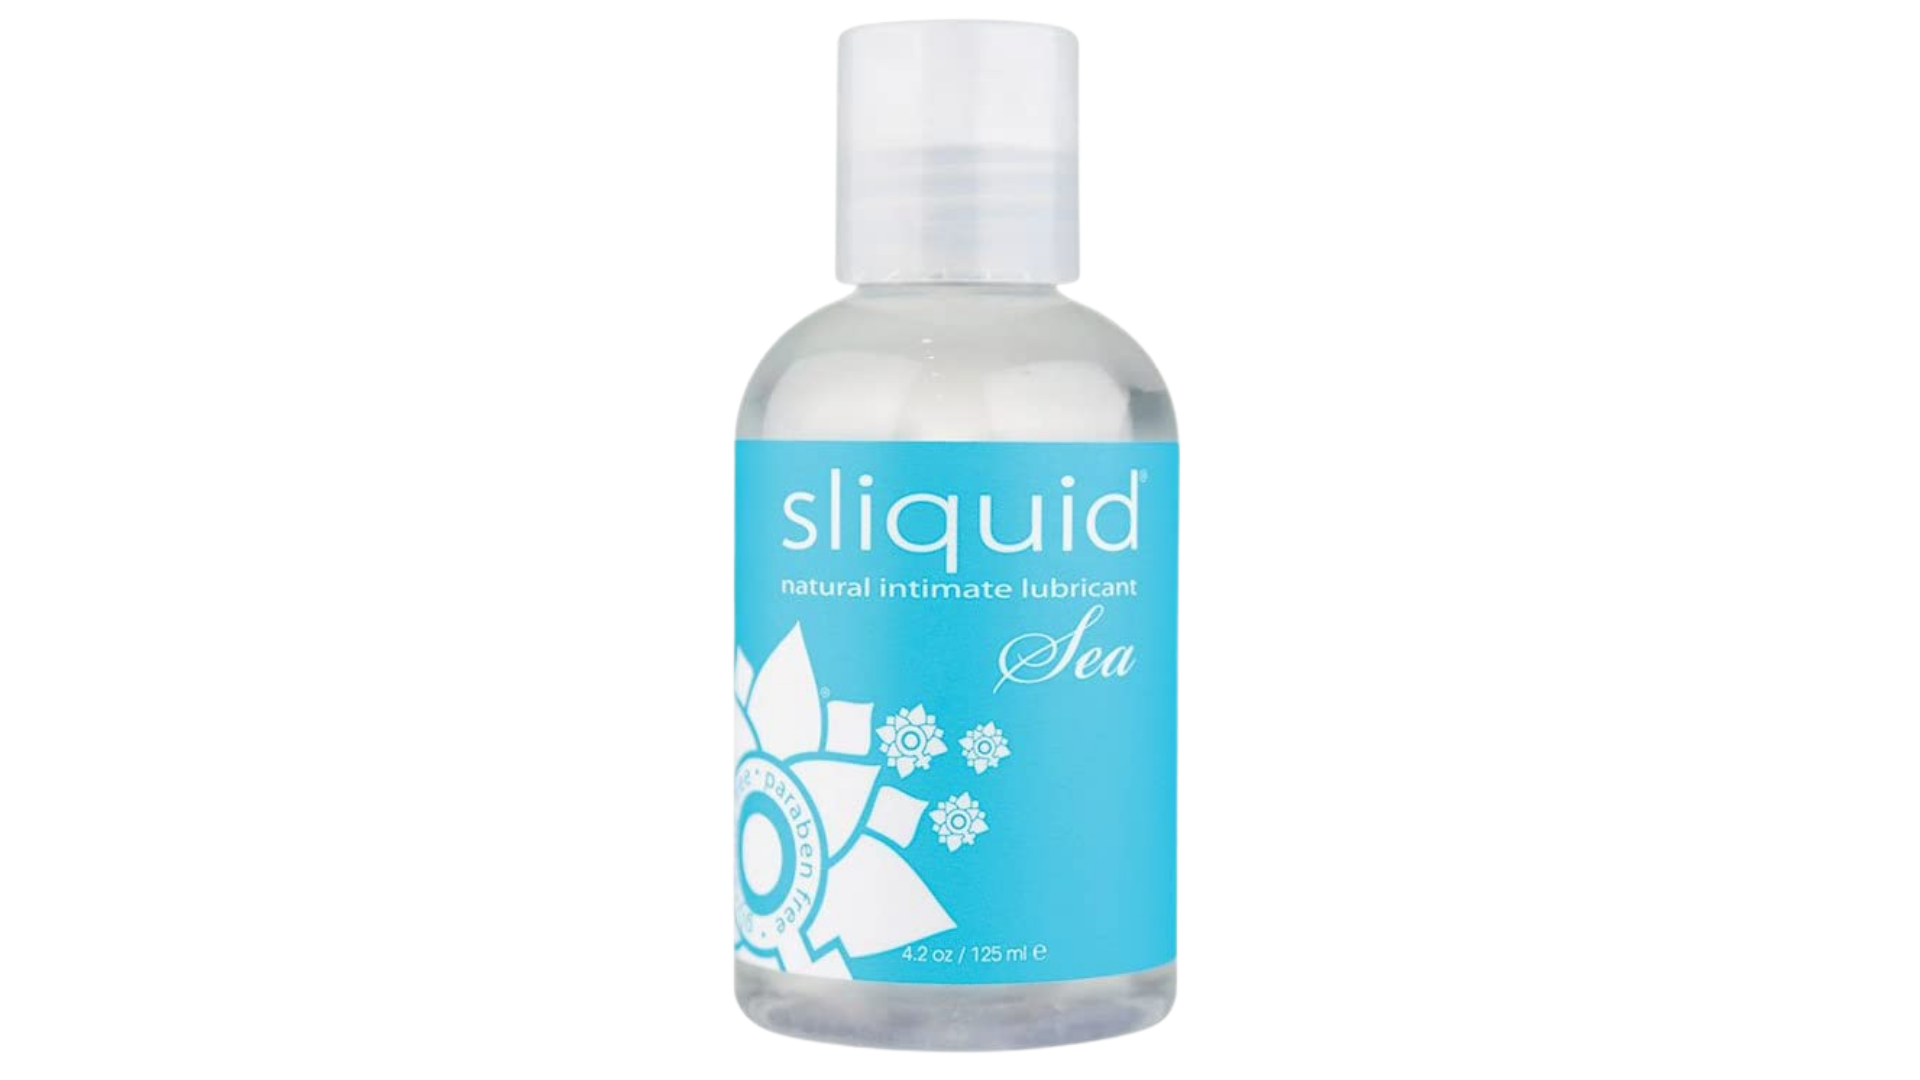 Sliquids best lubricant for menopausal dryness